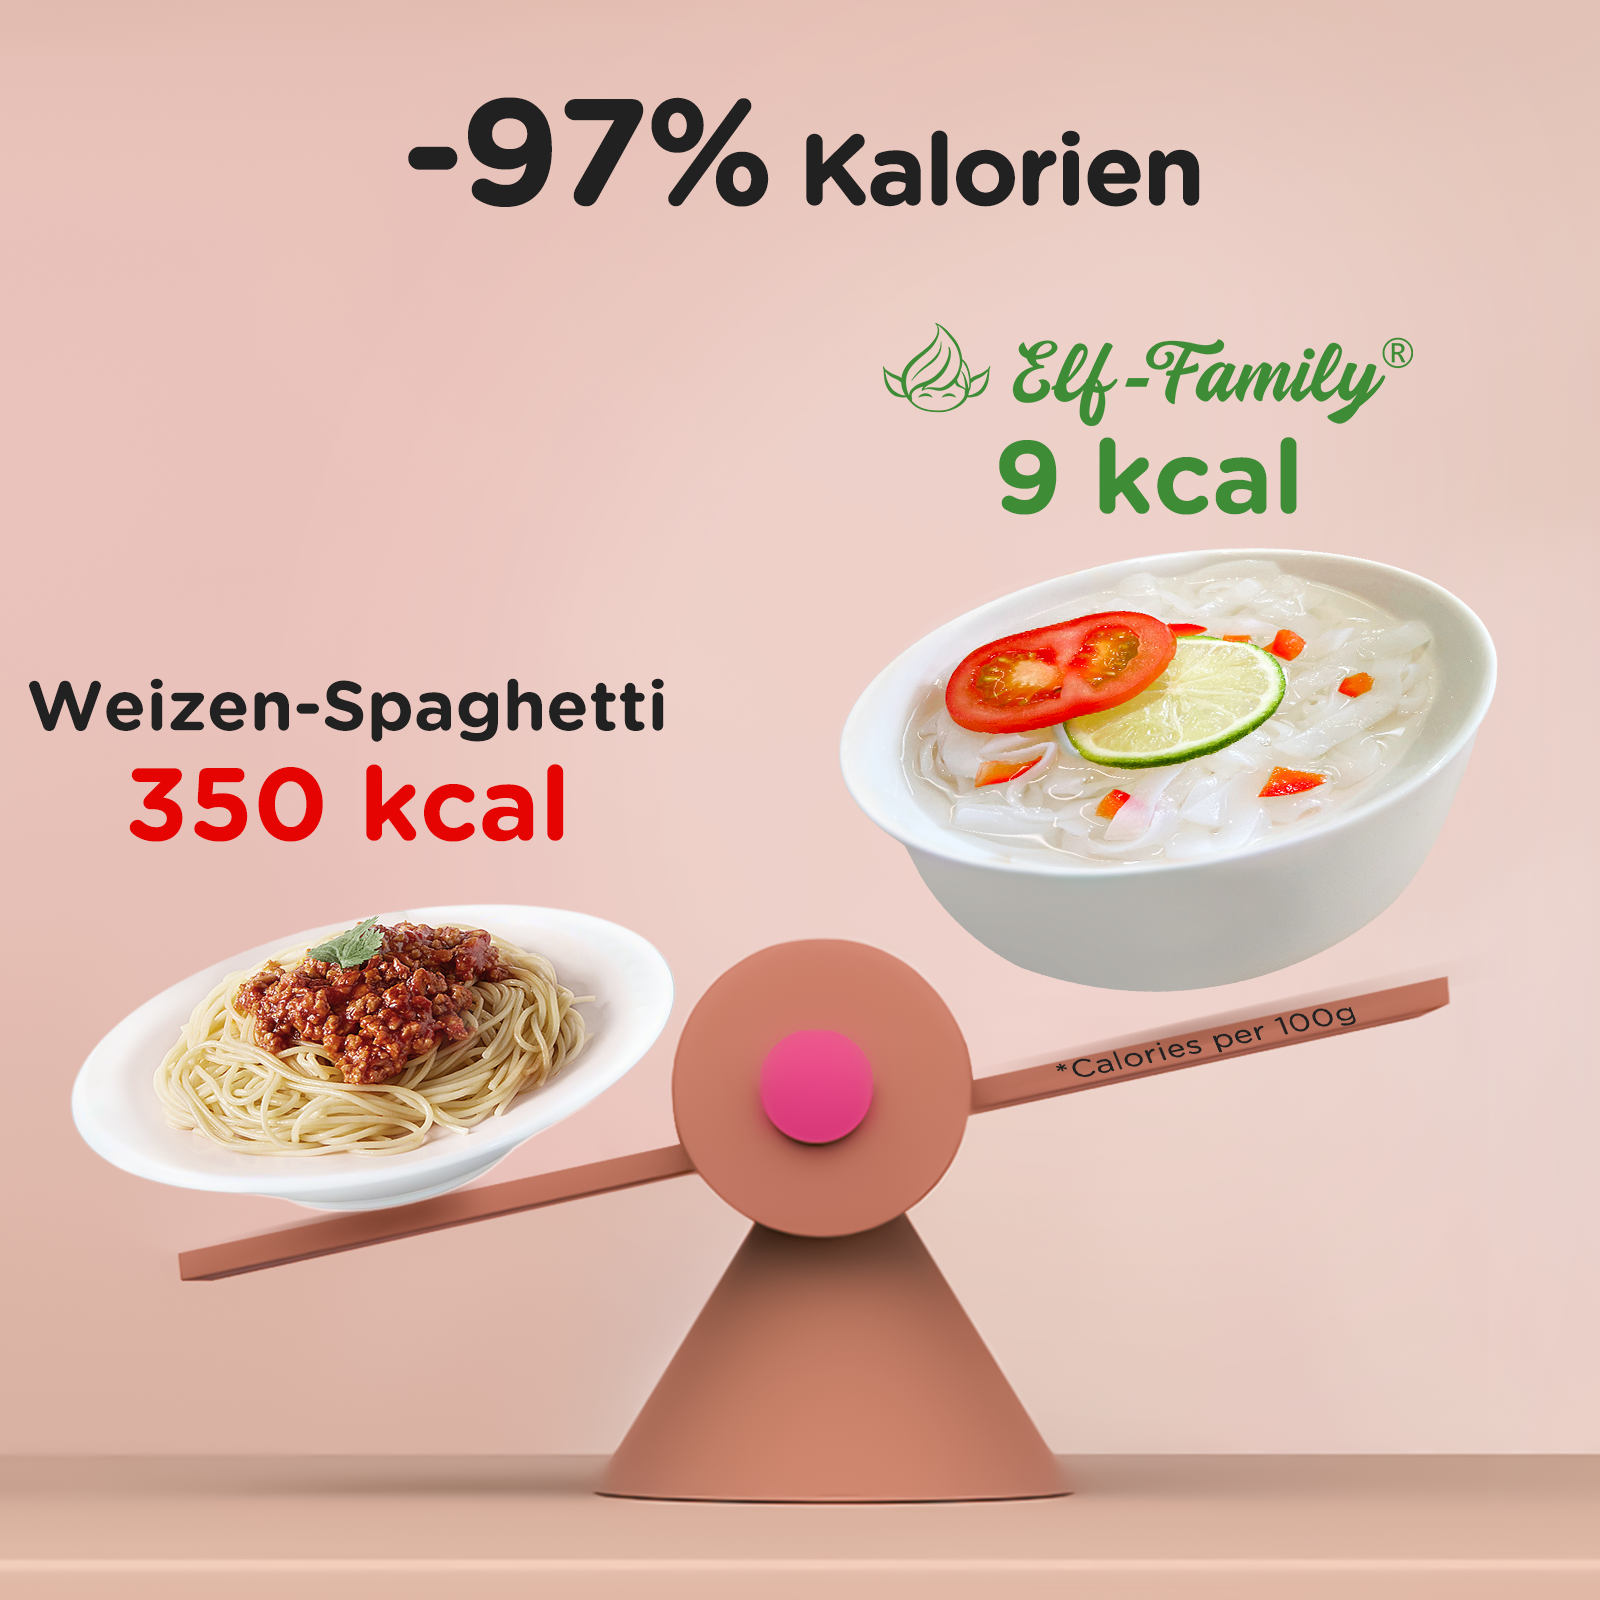 Elf-Family XXXL Gastro Pack 1.34kg Shirataki Noodles for Restaurants - Only 9kcal, Low Carb, Instant, Family Pack Konjac Noodles, Keto, Low Calorie, Vegan, Gluten Free -Fettuccine 